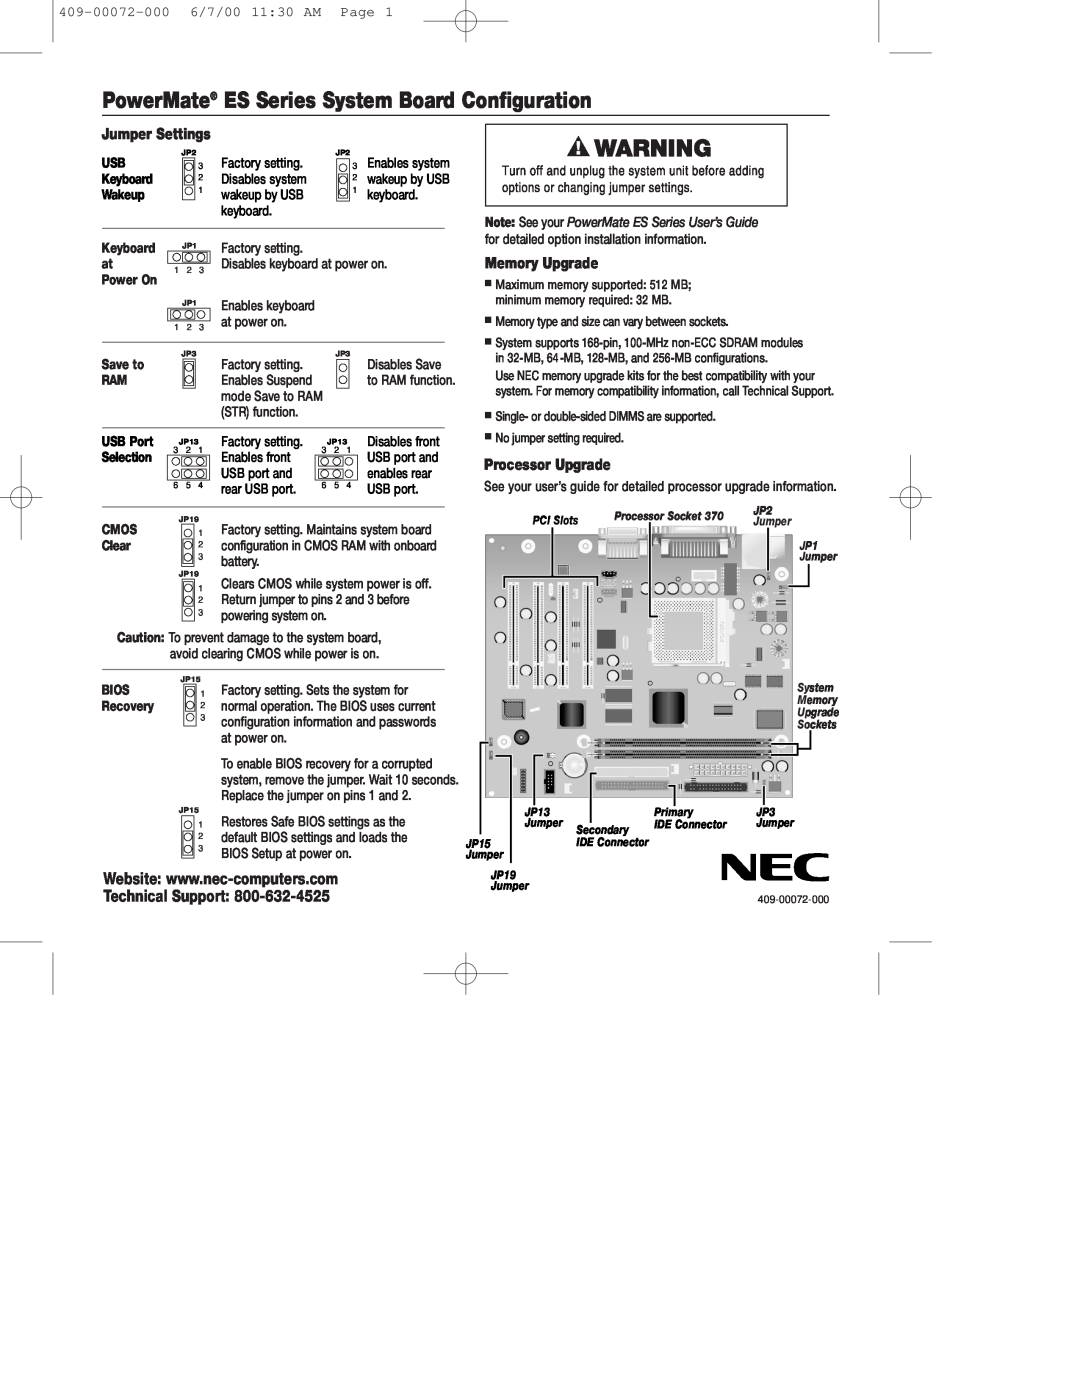 NEC manual PowerMate ES Series System Board Configuration, Jumper Settings, Memory Upgrade, Processor Upgrade, Wakeup 